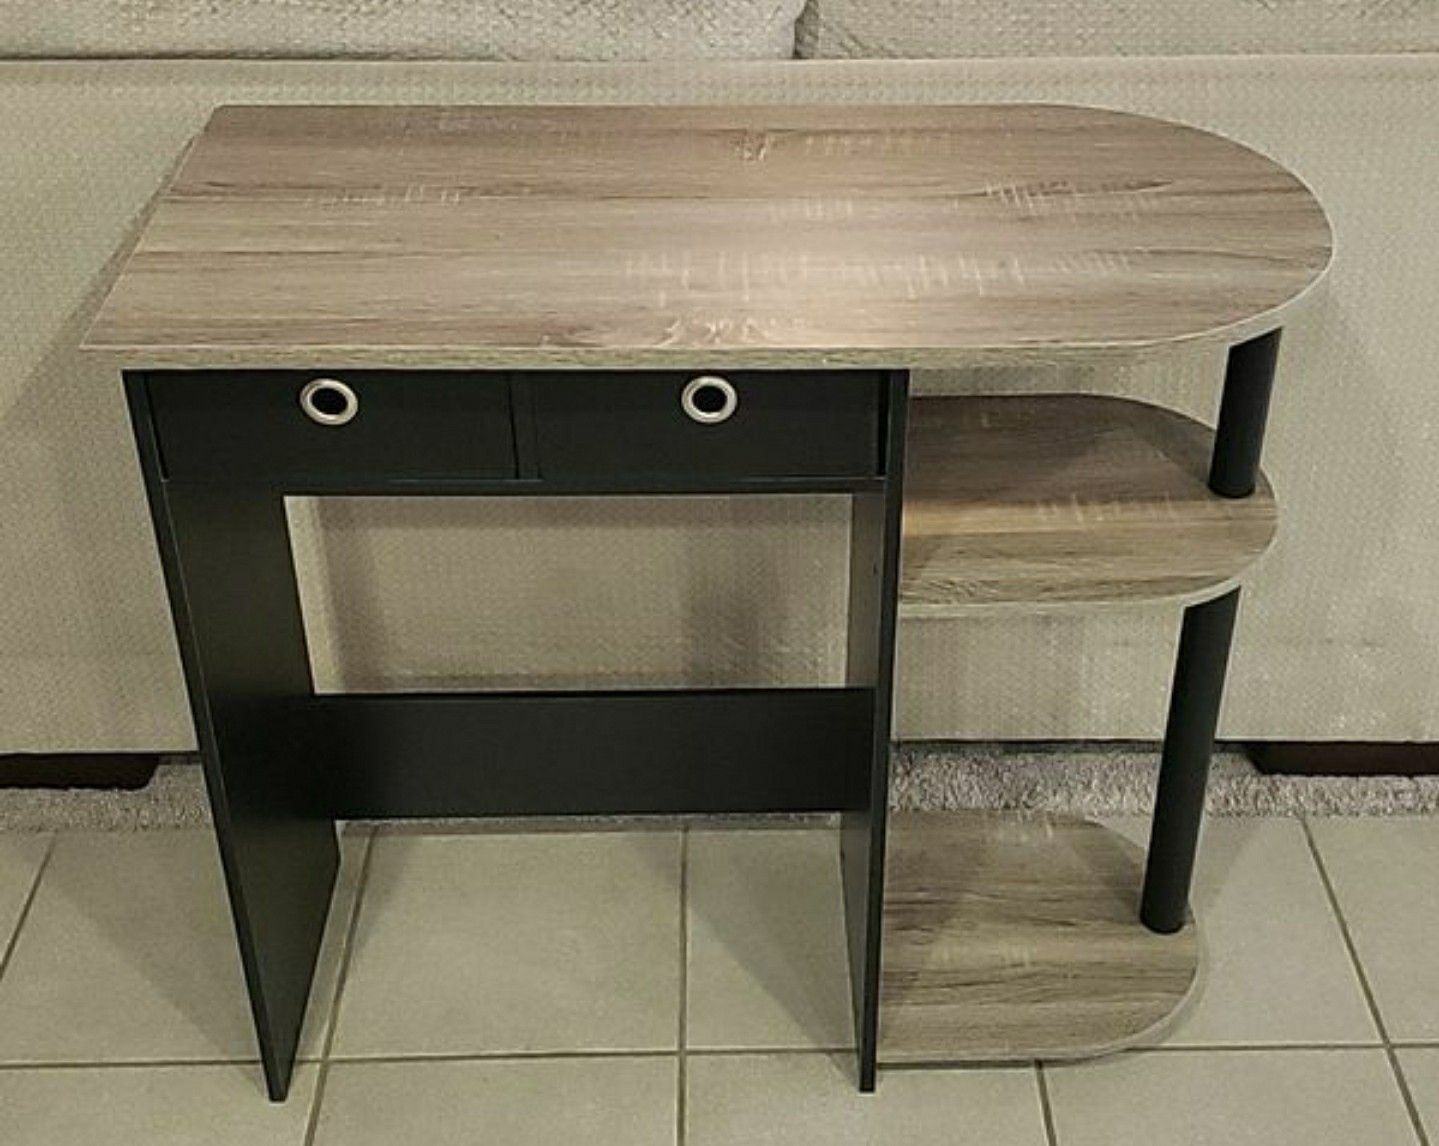 New Grey & Black Desk with Shelving & Storage Bins